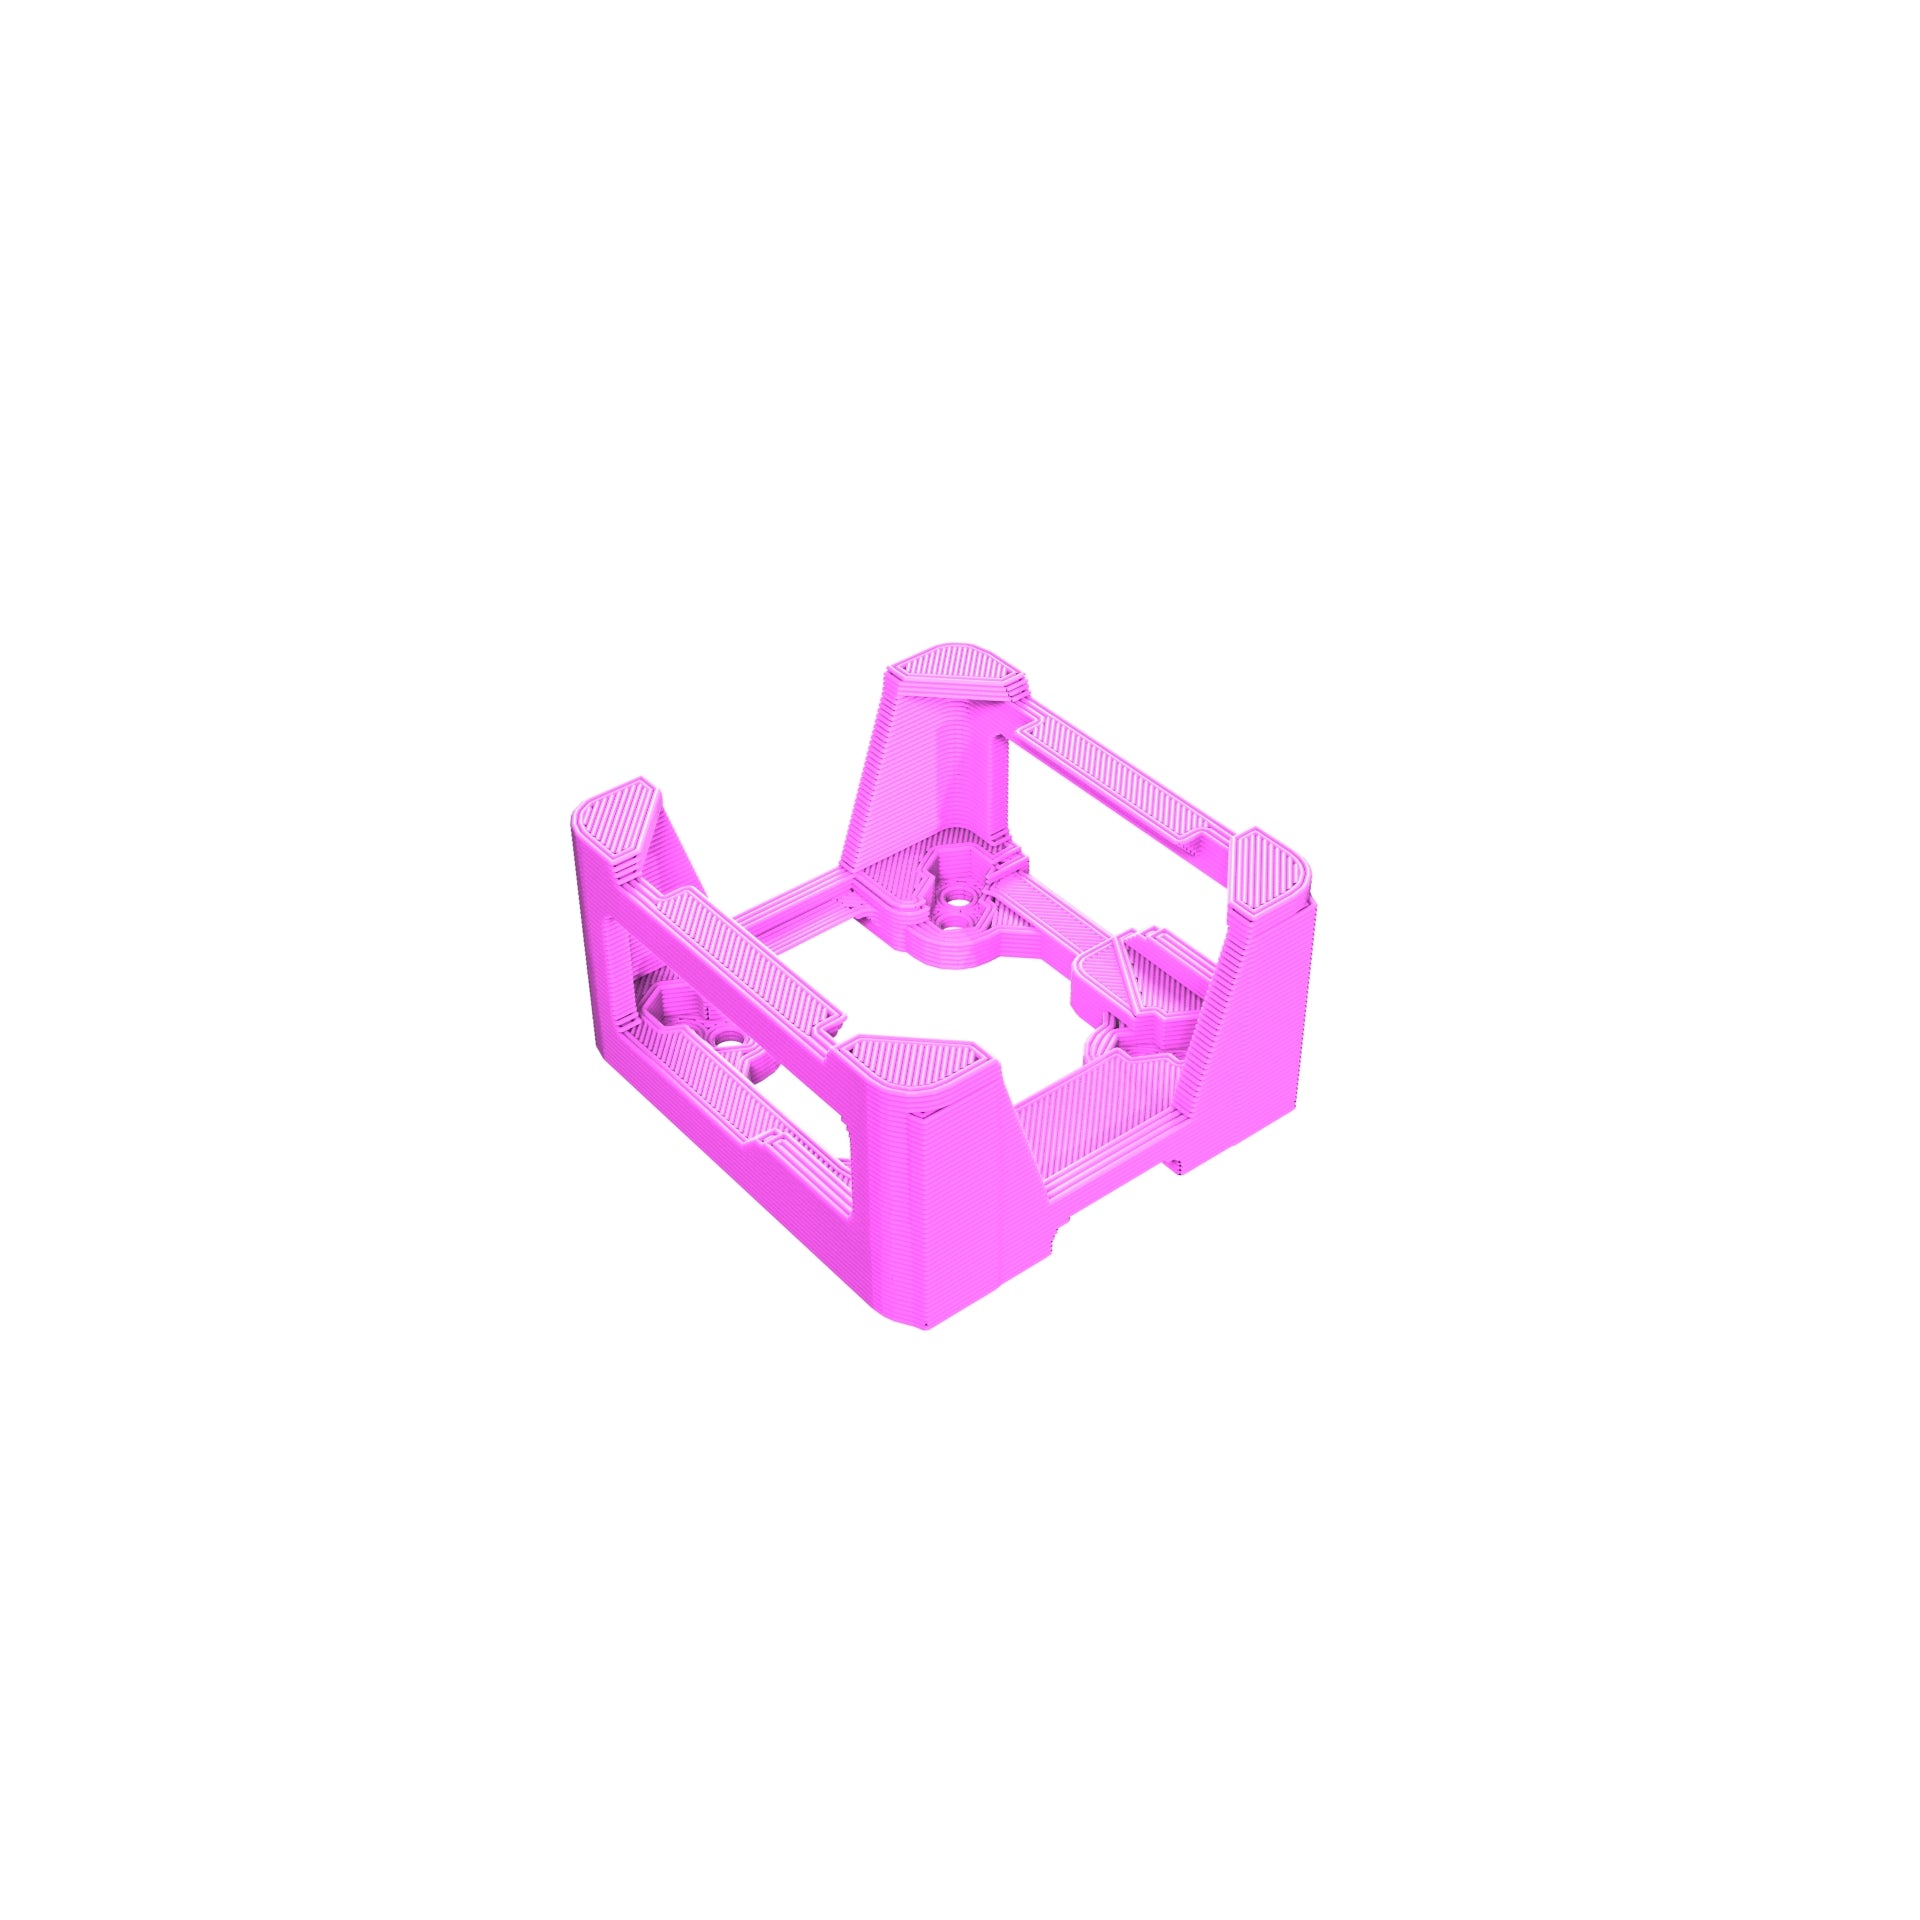 FPV DJI O3 20x20 and 25.5x25.5 Mounting Adapter Case 3D Printed TPU Pink